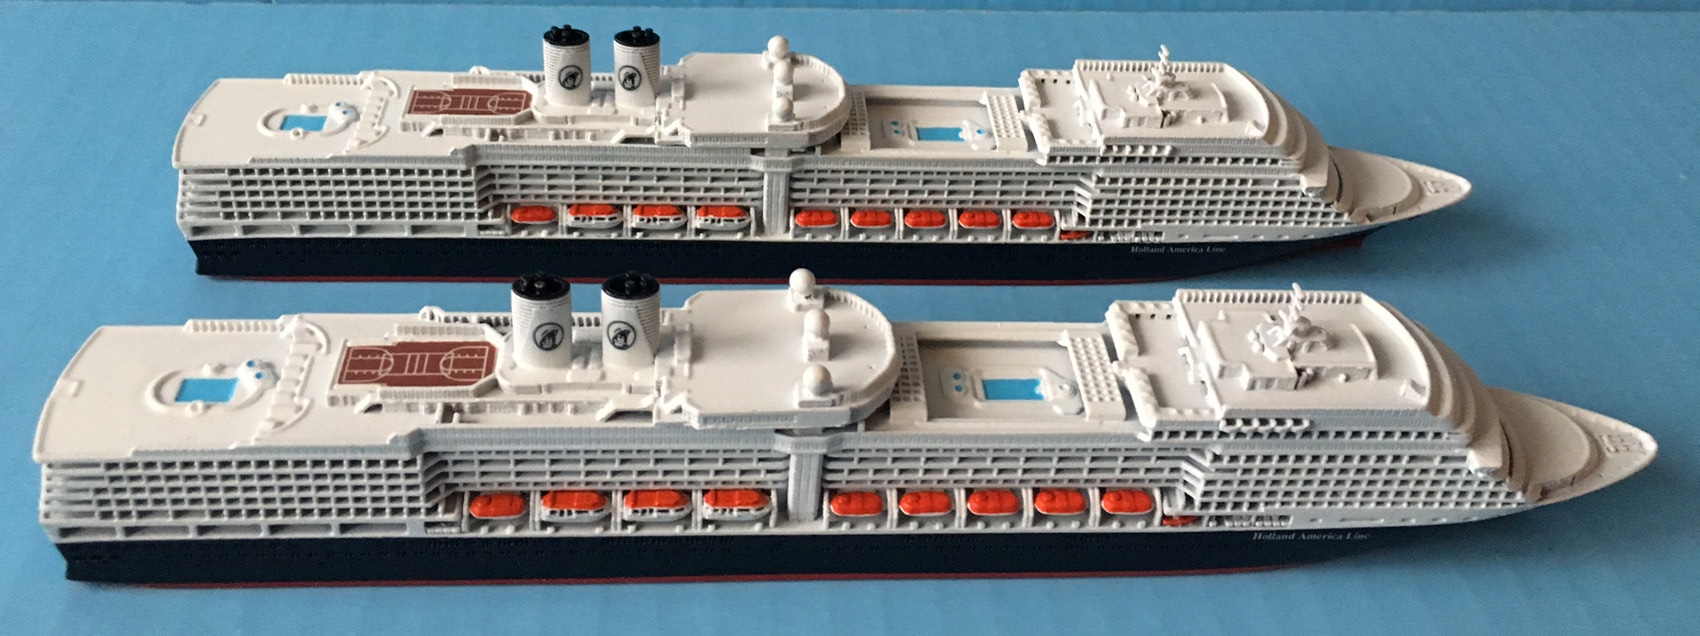 Eurodam and Nieuw Amsterdam cruise ship modelsPicture